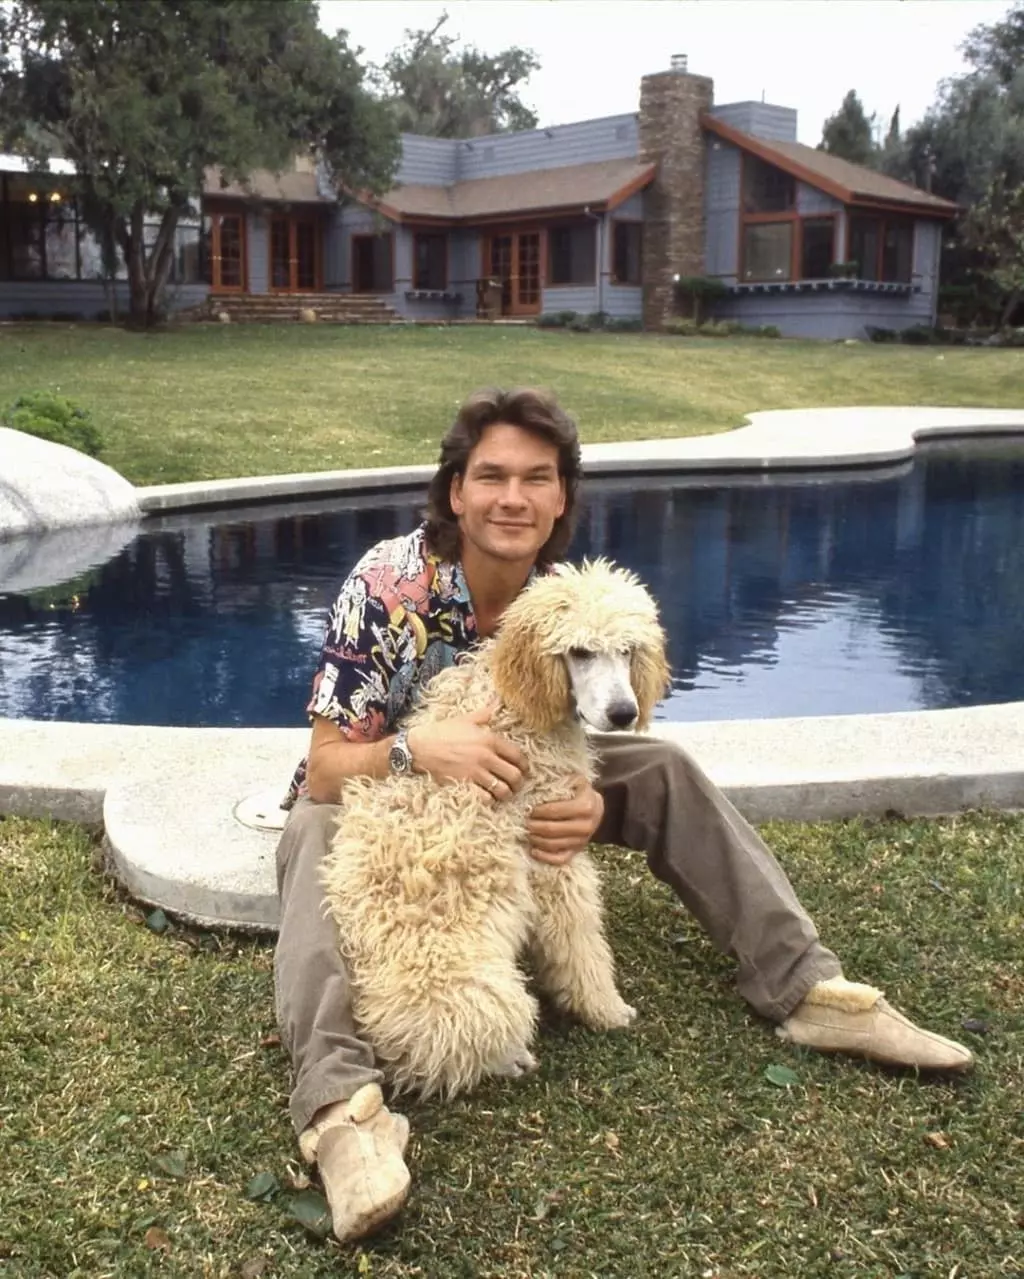 Patrick Swayze and his dog